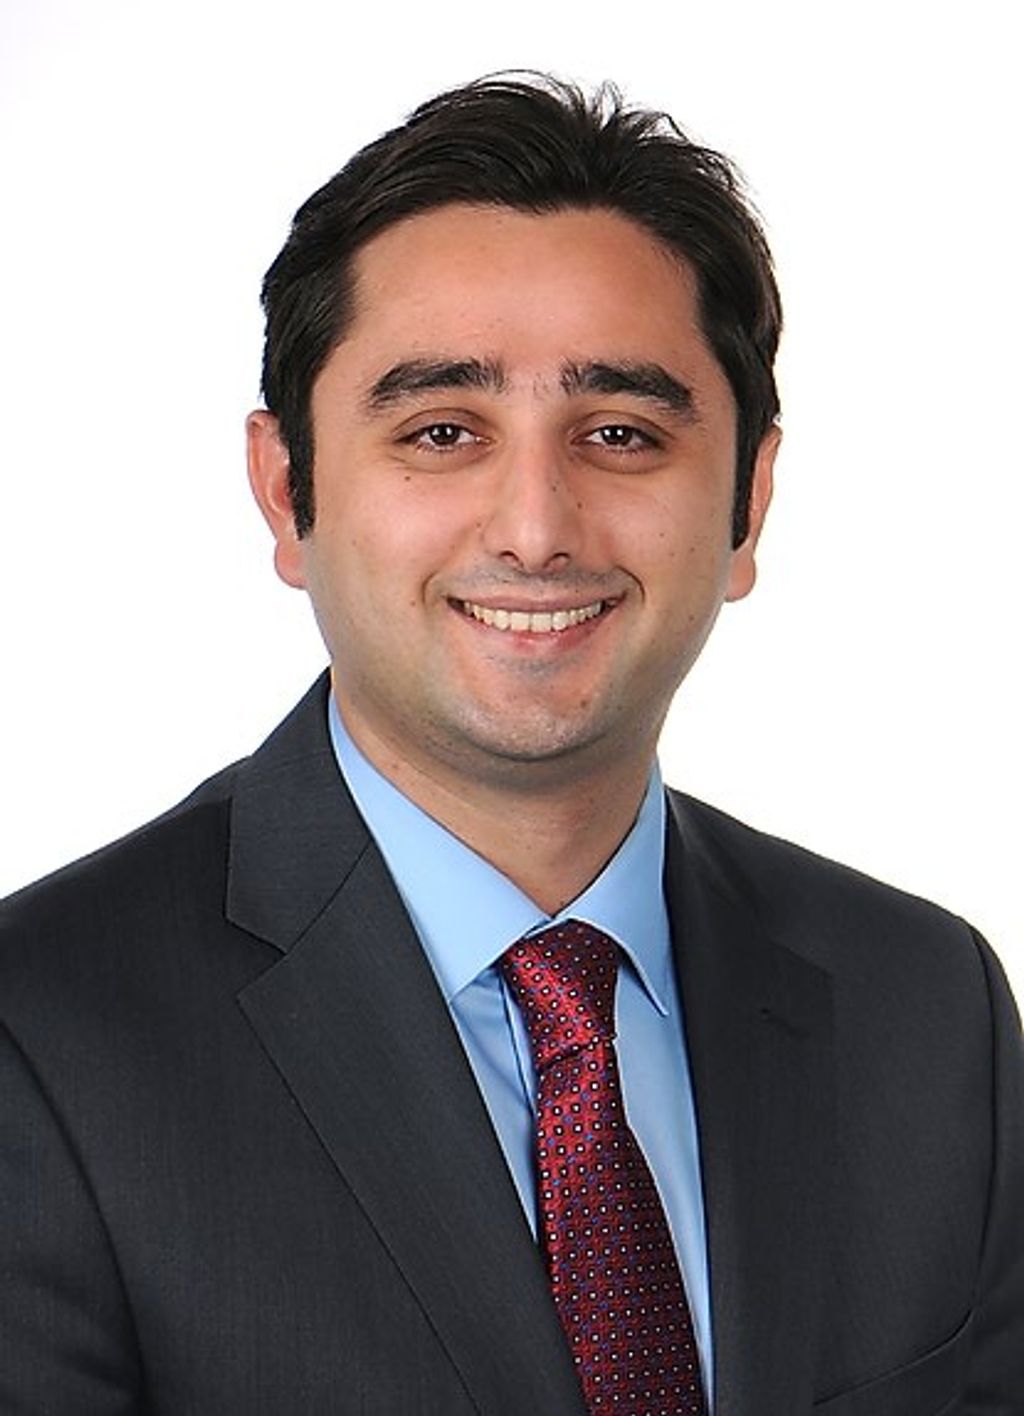 Mohammad-Dahrouj-MD-PhD